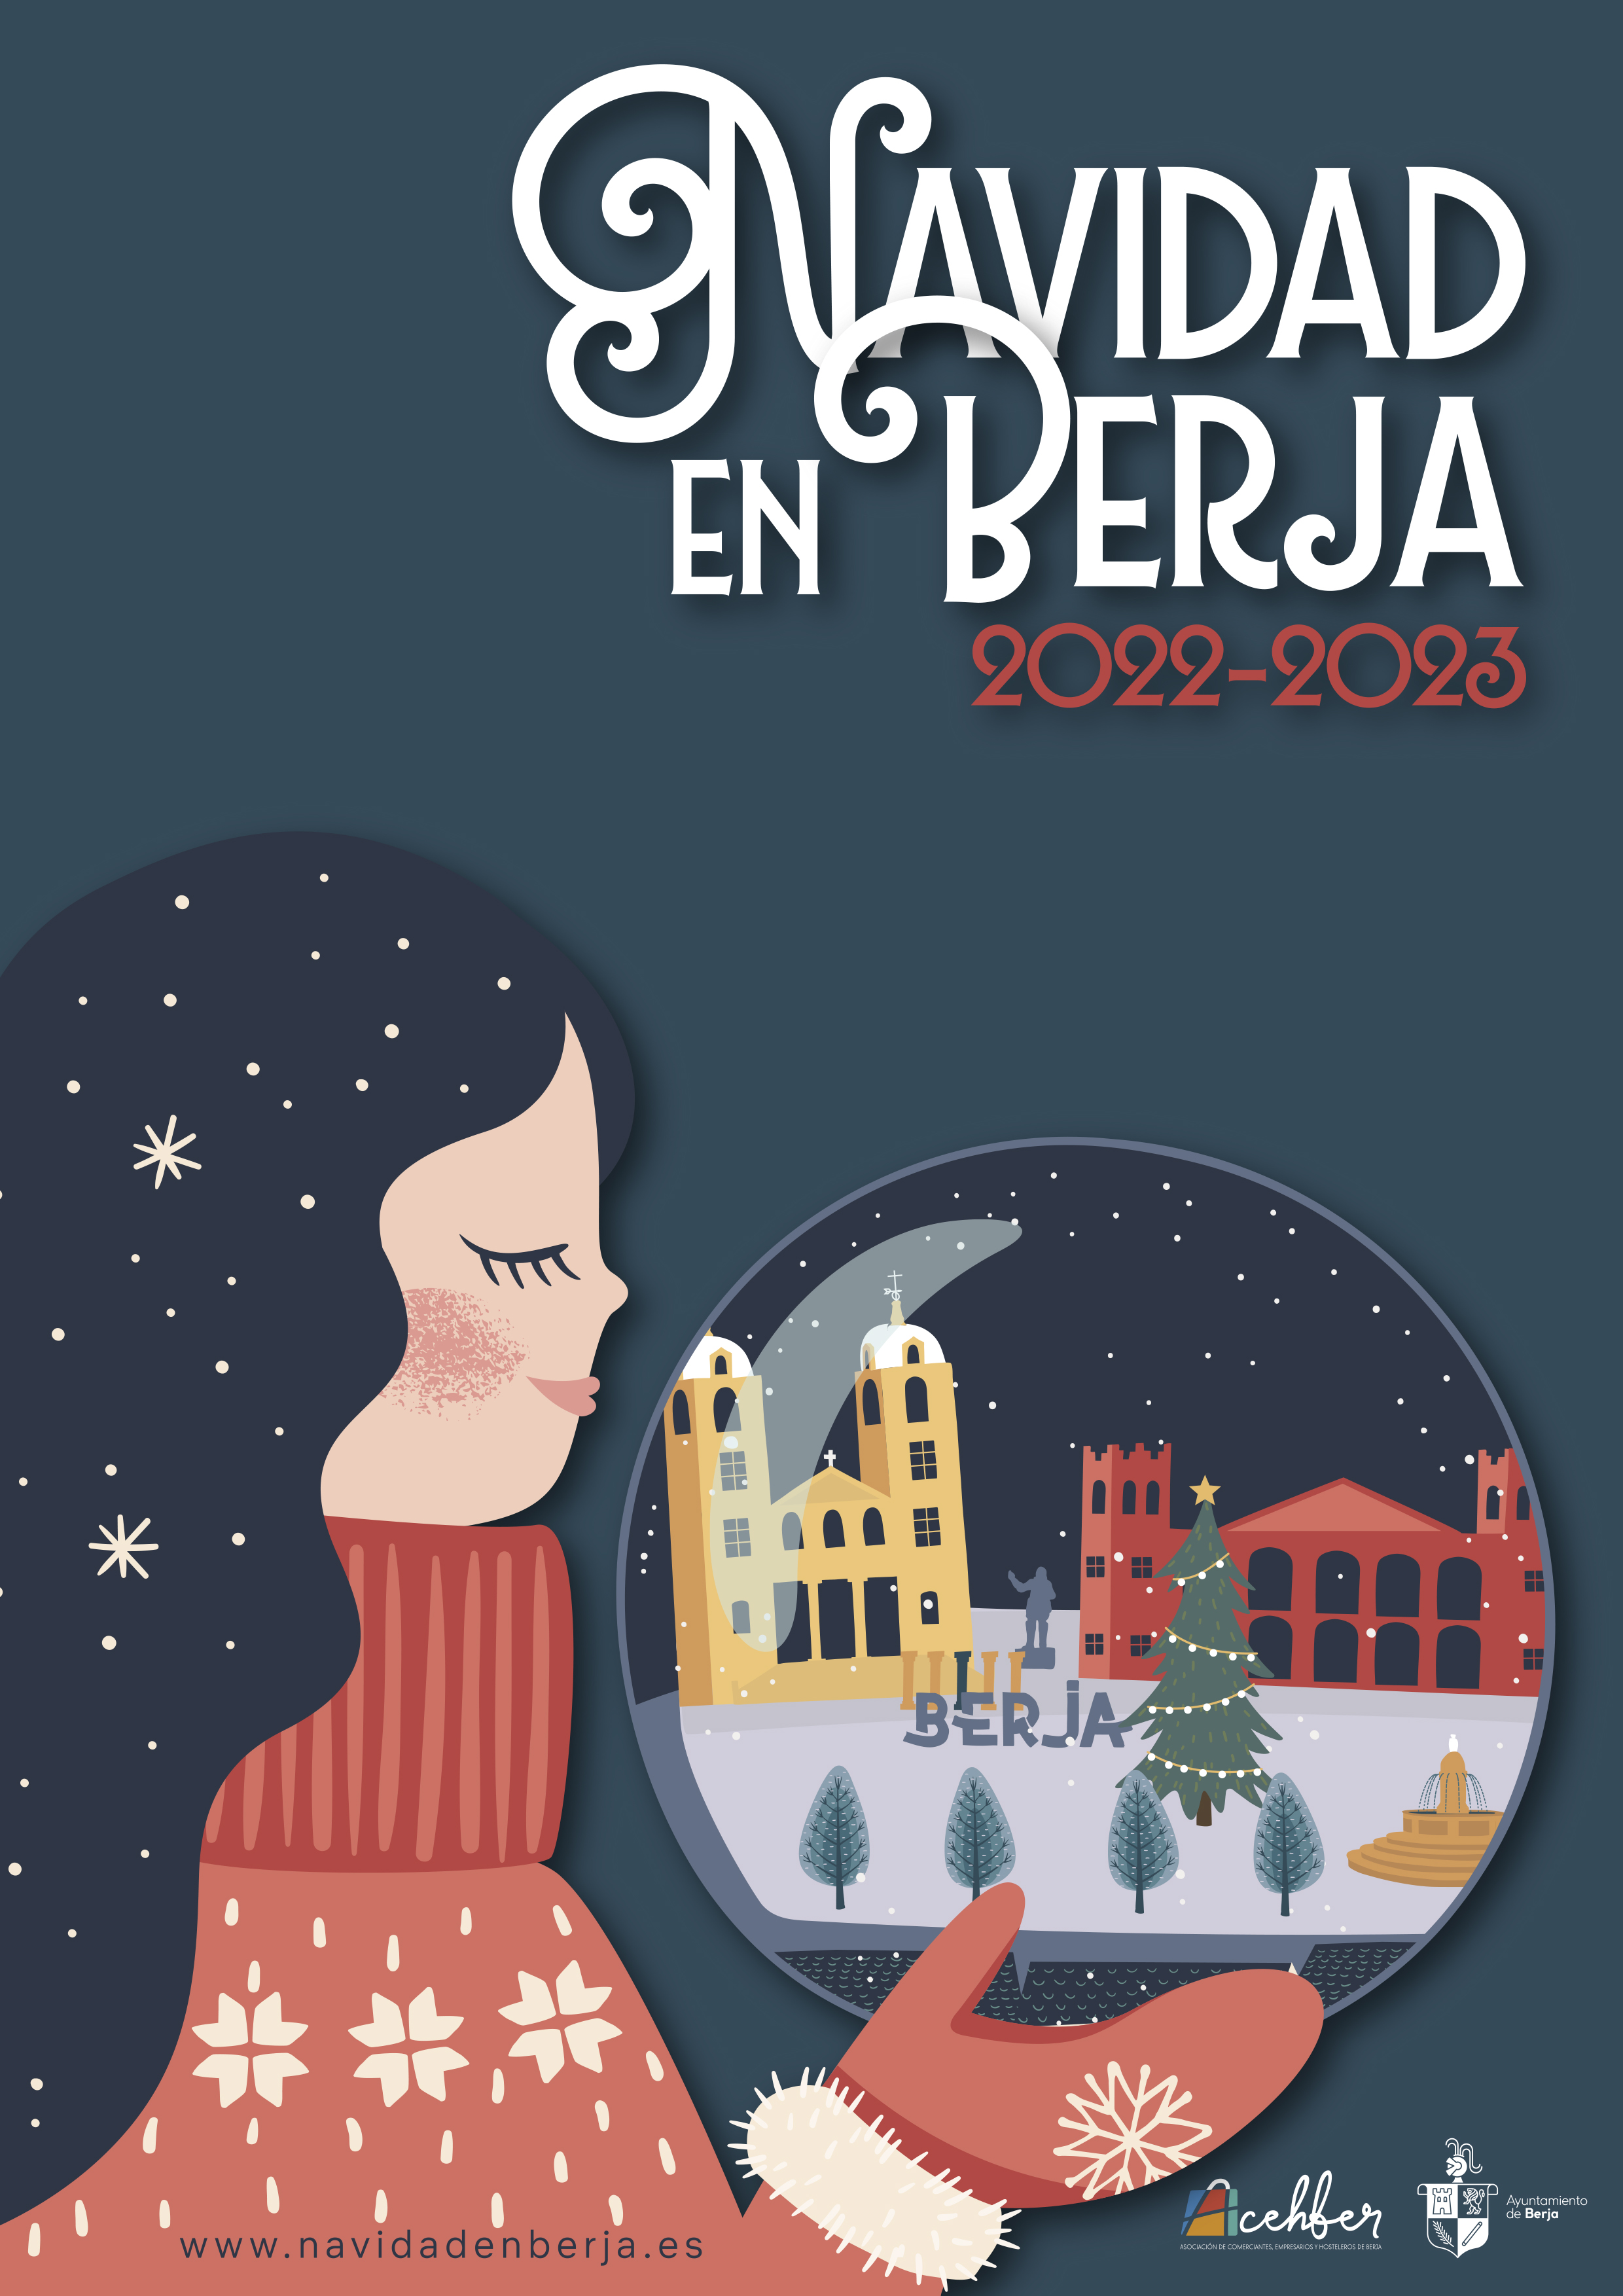 Berja en Navidad 2022-2023